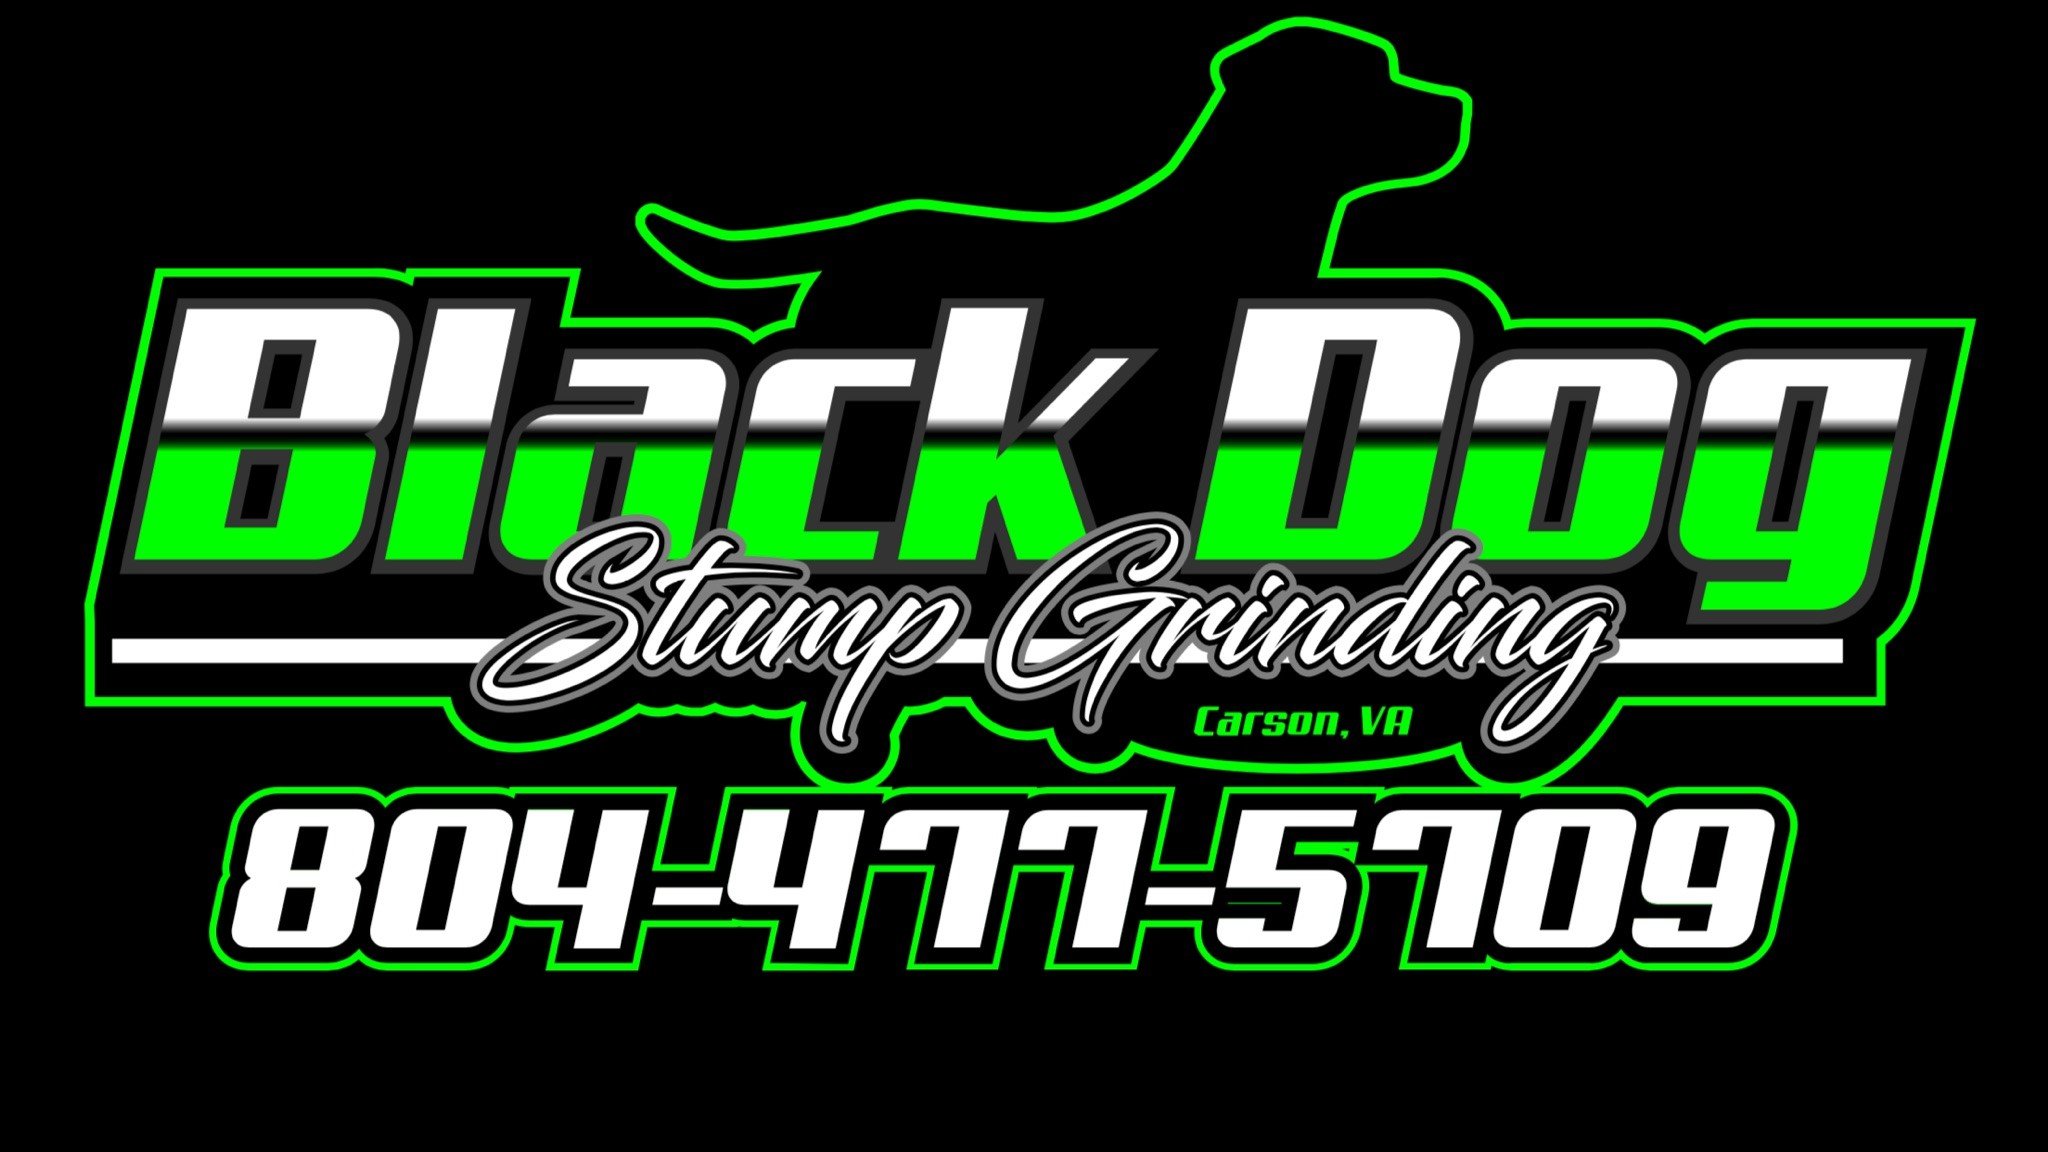 Black Dog Stump Grinding, LLC Logo